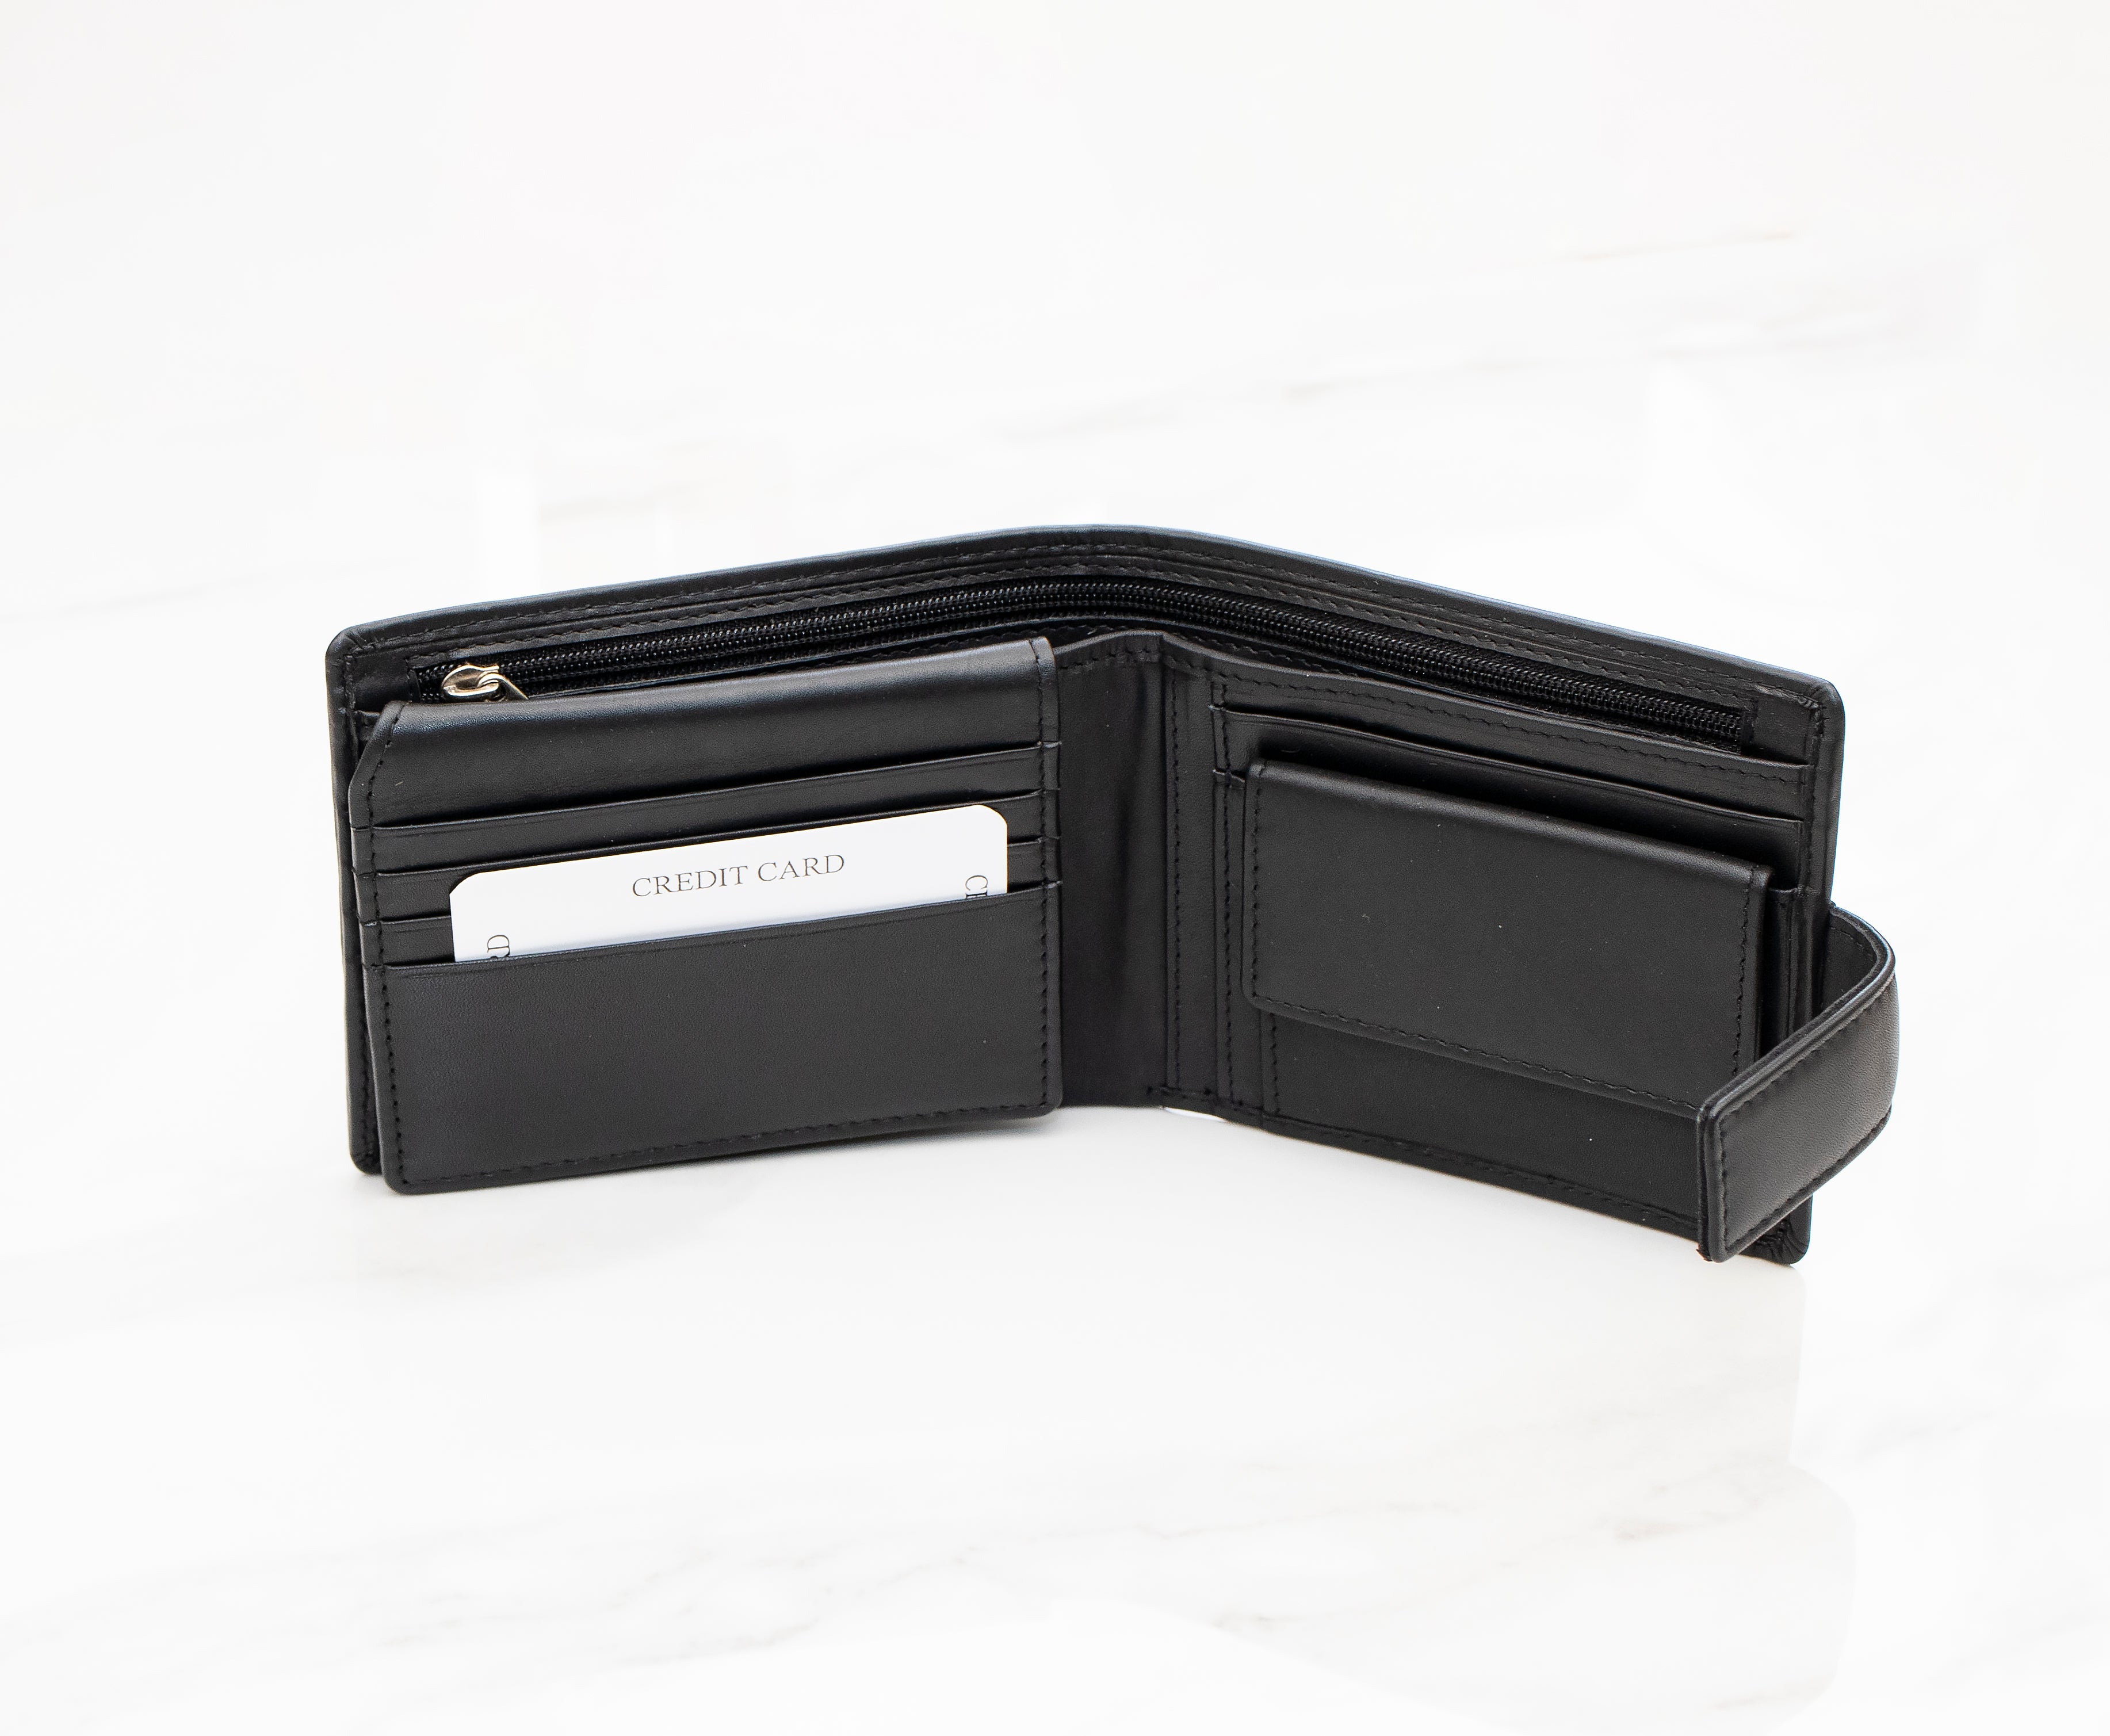 Ascort Men's Luxury Leather Trifold Wallet - 72864